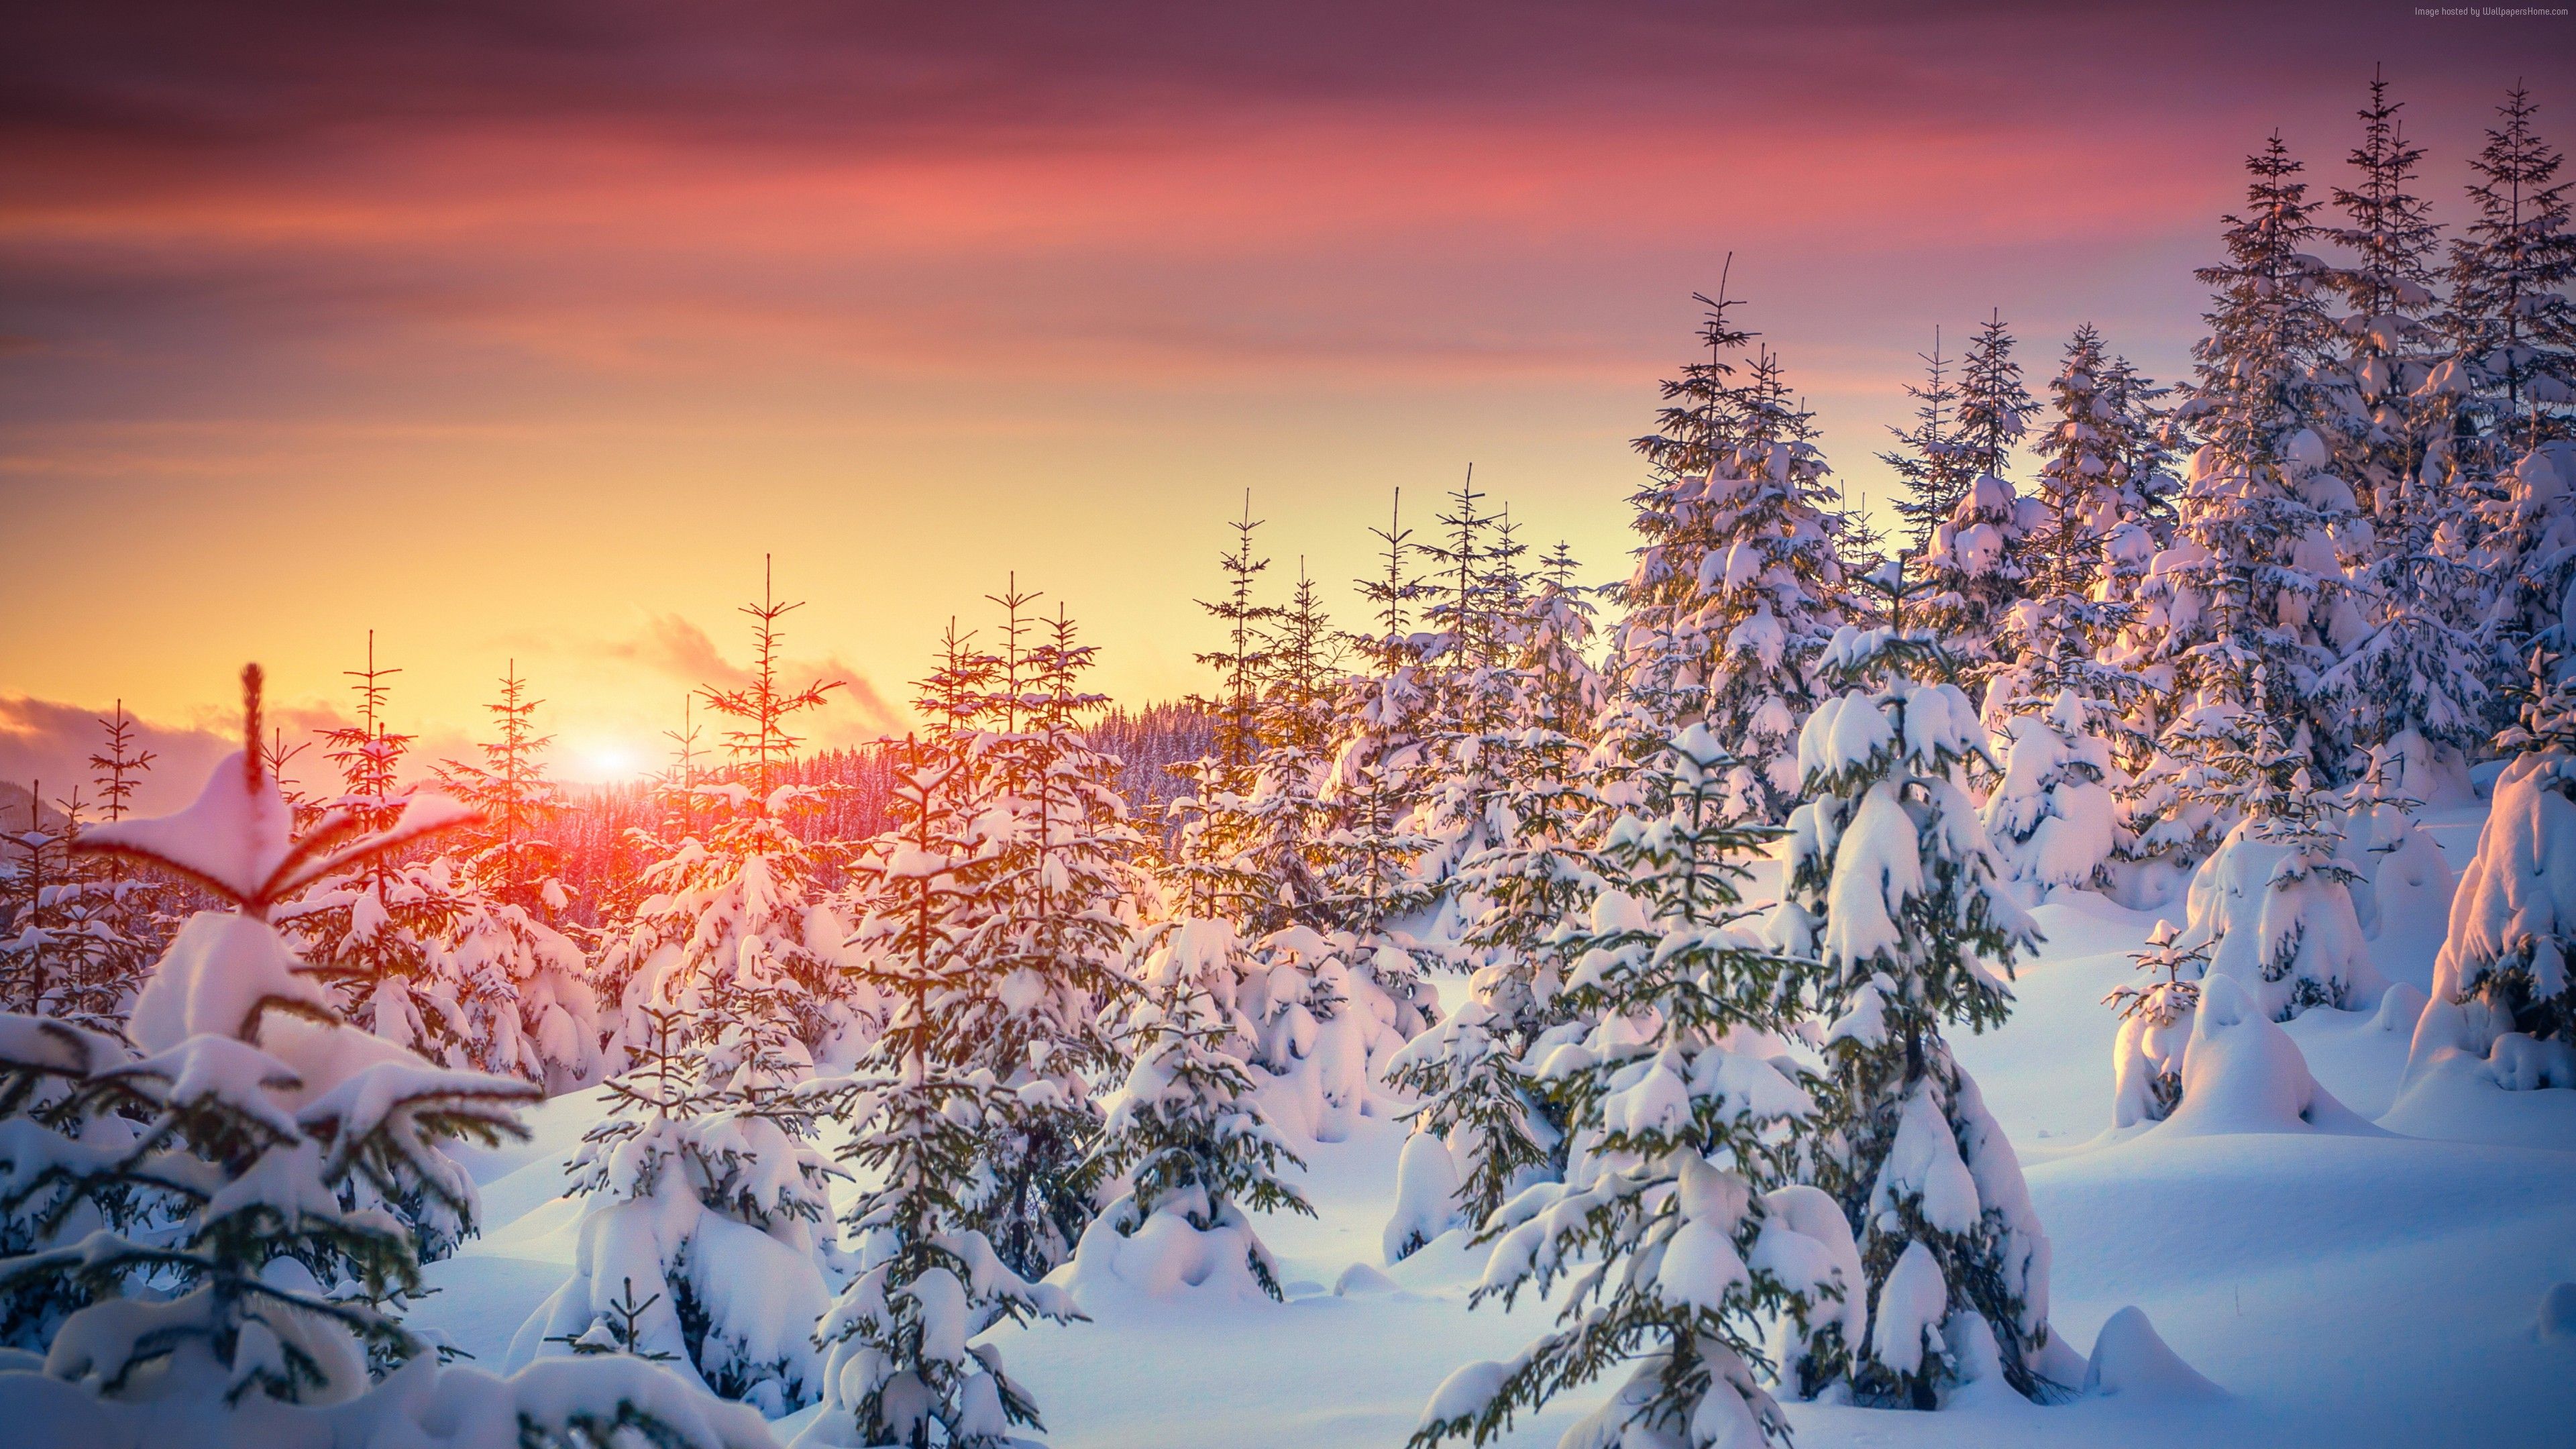 Pines Wallpaper Nature: Pines snow sunset winter. Winter sunrise, Sunset wallpaper, Colorful landscape